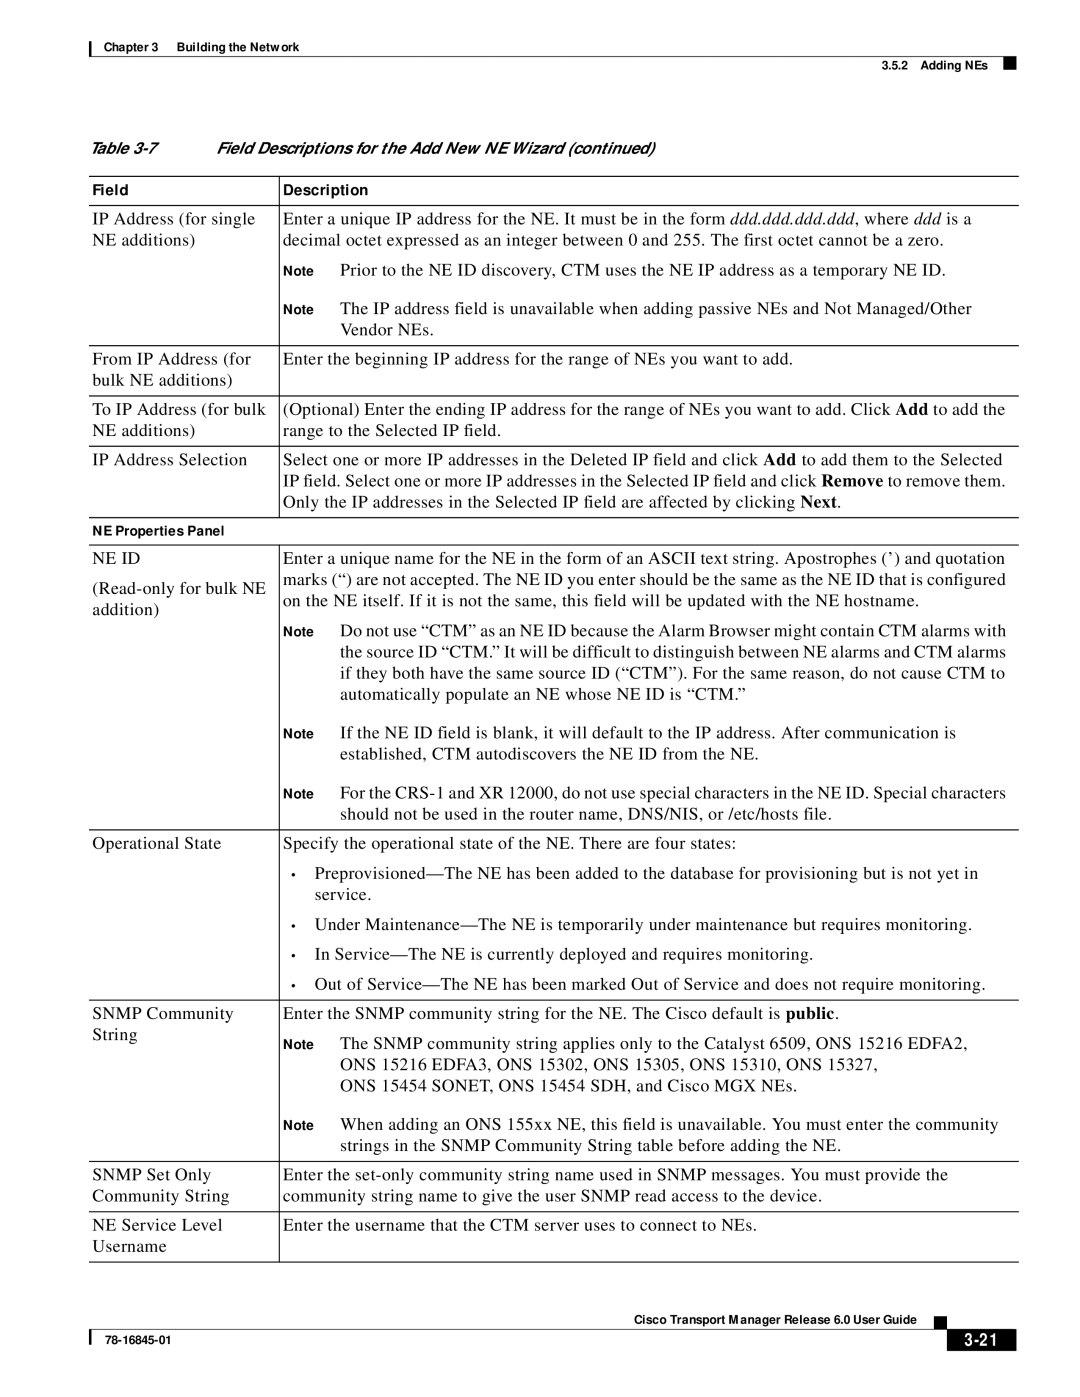 Cisco Systems 78-16845-01 manual 3-21, Field Descriptions for the Add New NE Wizard continued, NE Properties Panel 